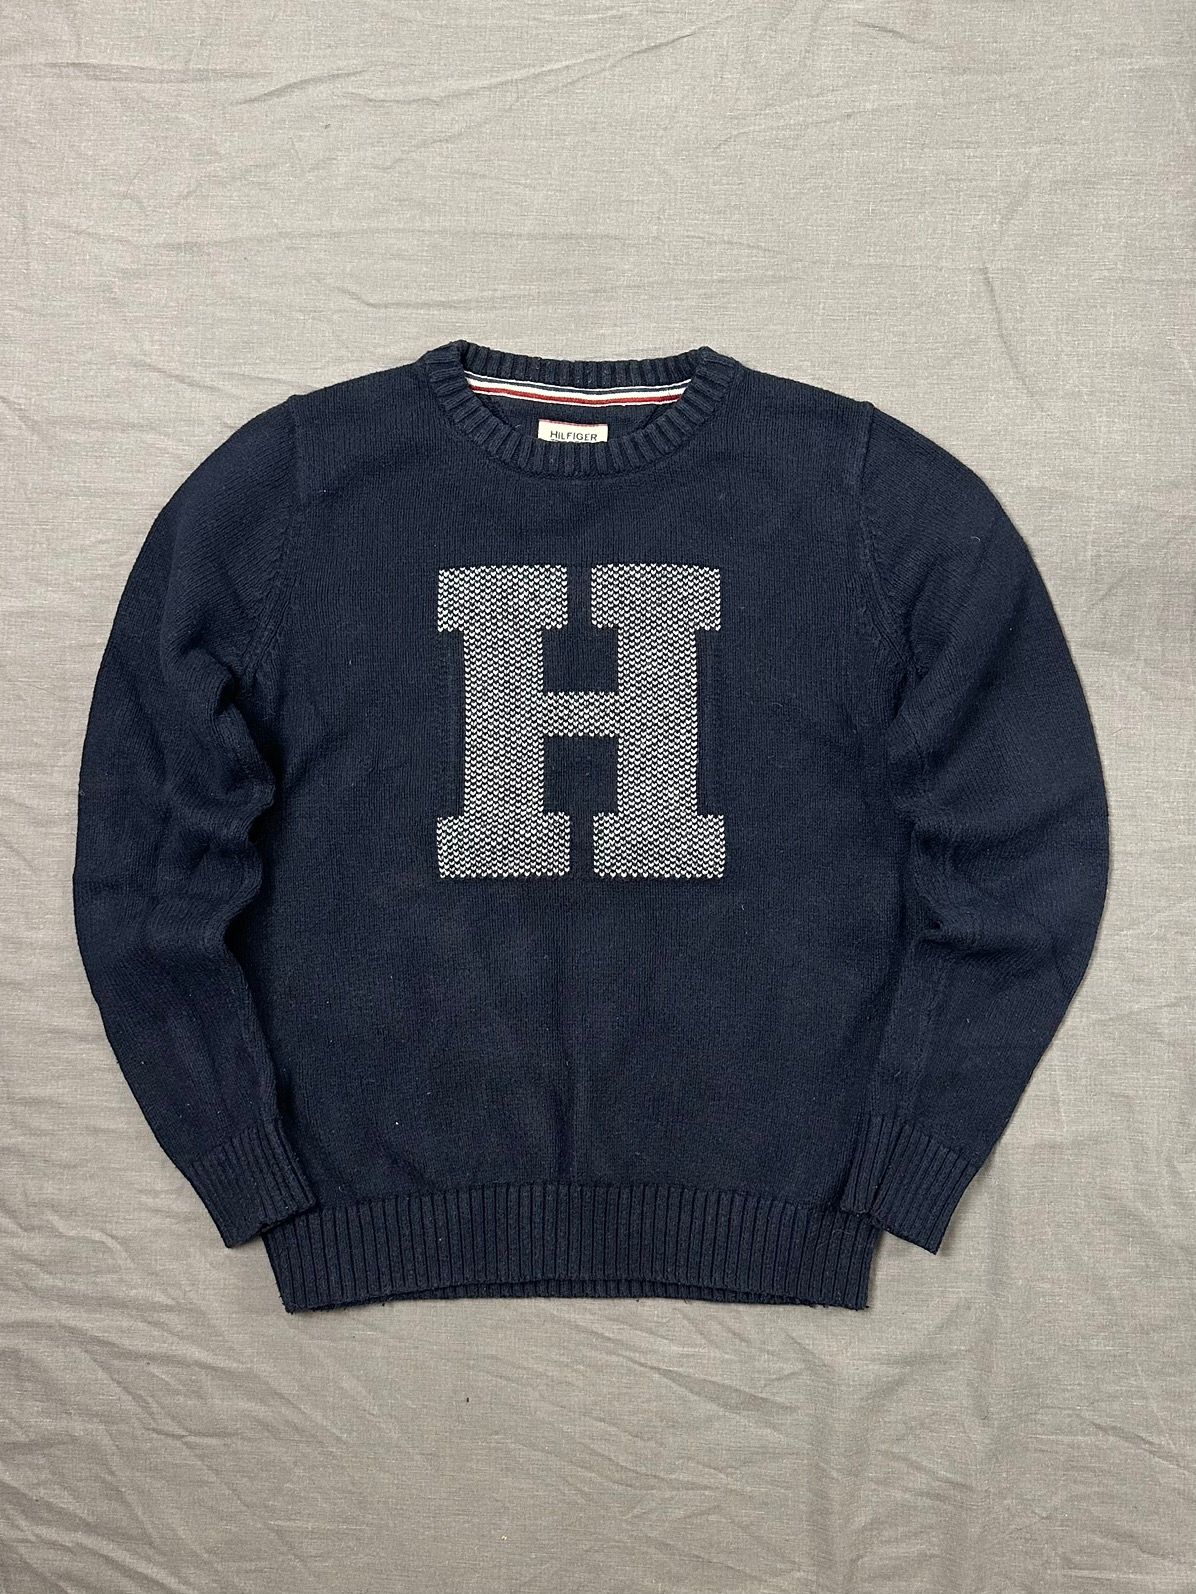 Pre-owned Tommy Hilfiger X Vintage Tommy Hilfiger Navy Knit Sweater Y2k